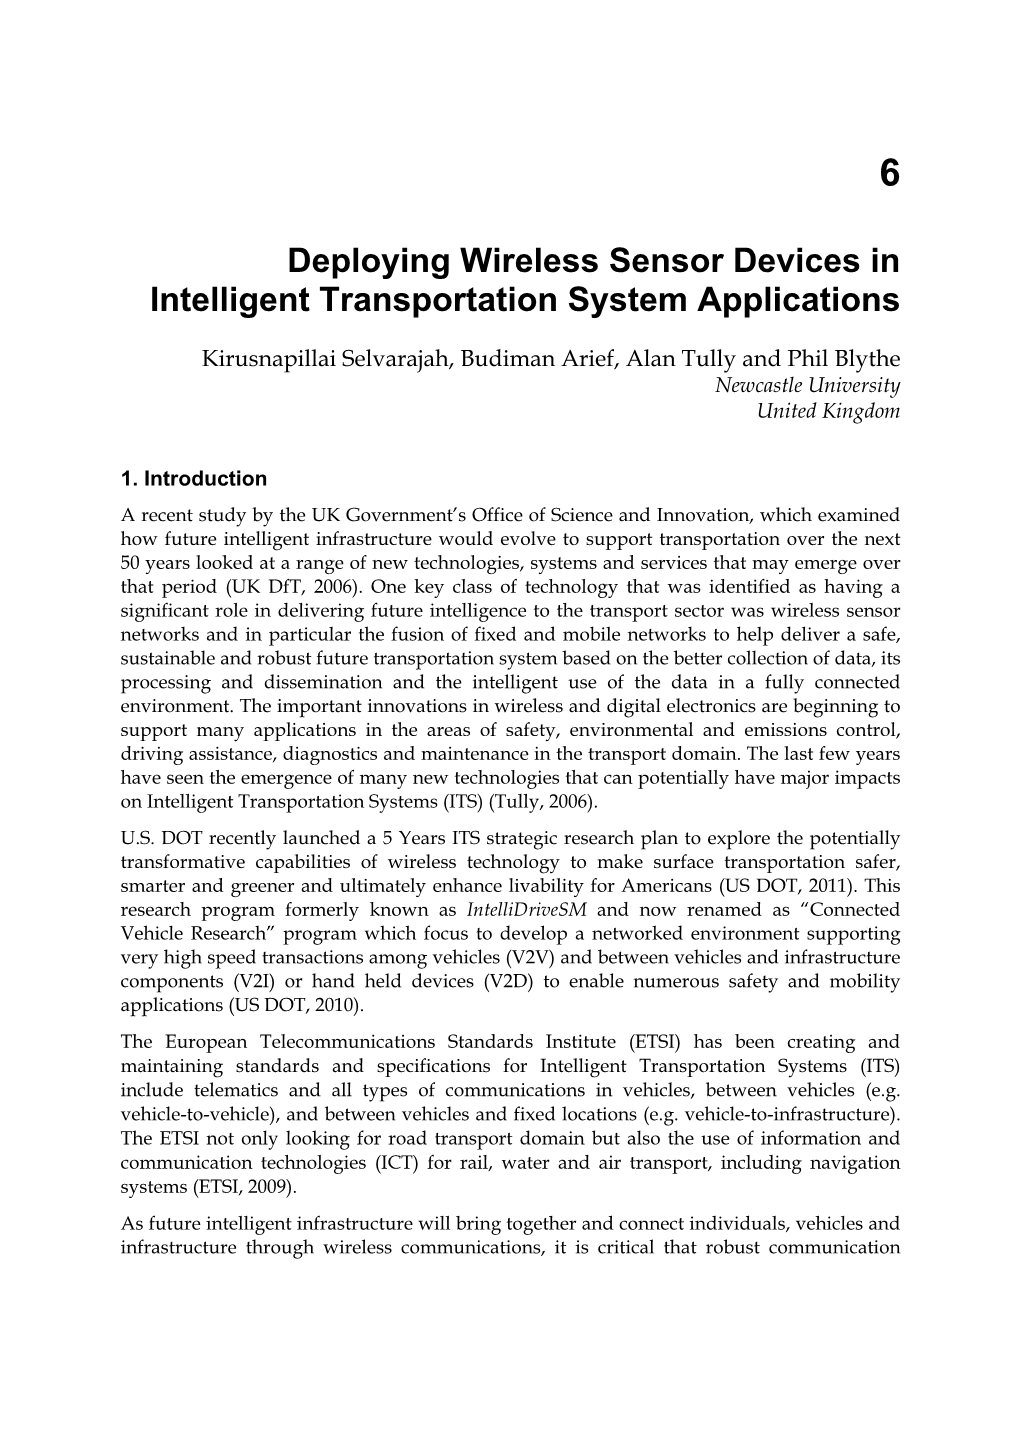 Deploying Wireless Sensor Devices in Intelligent Transportation System Applications